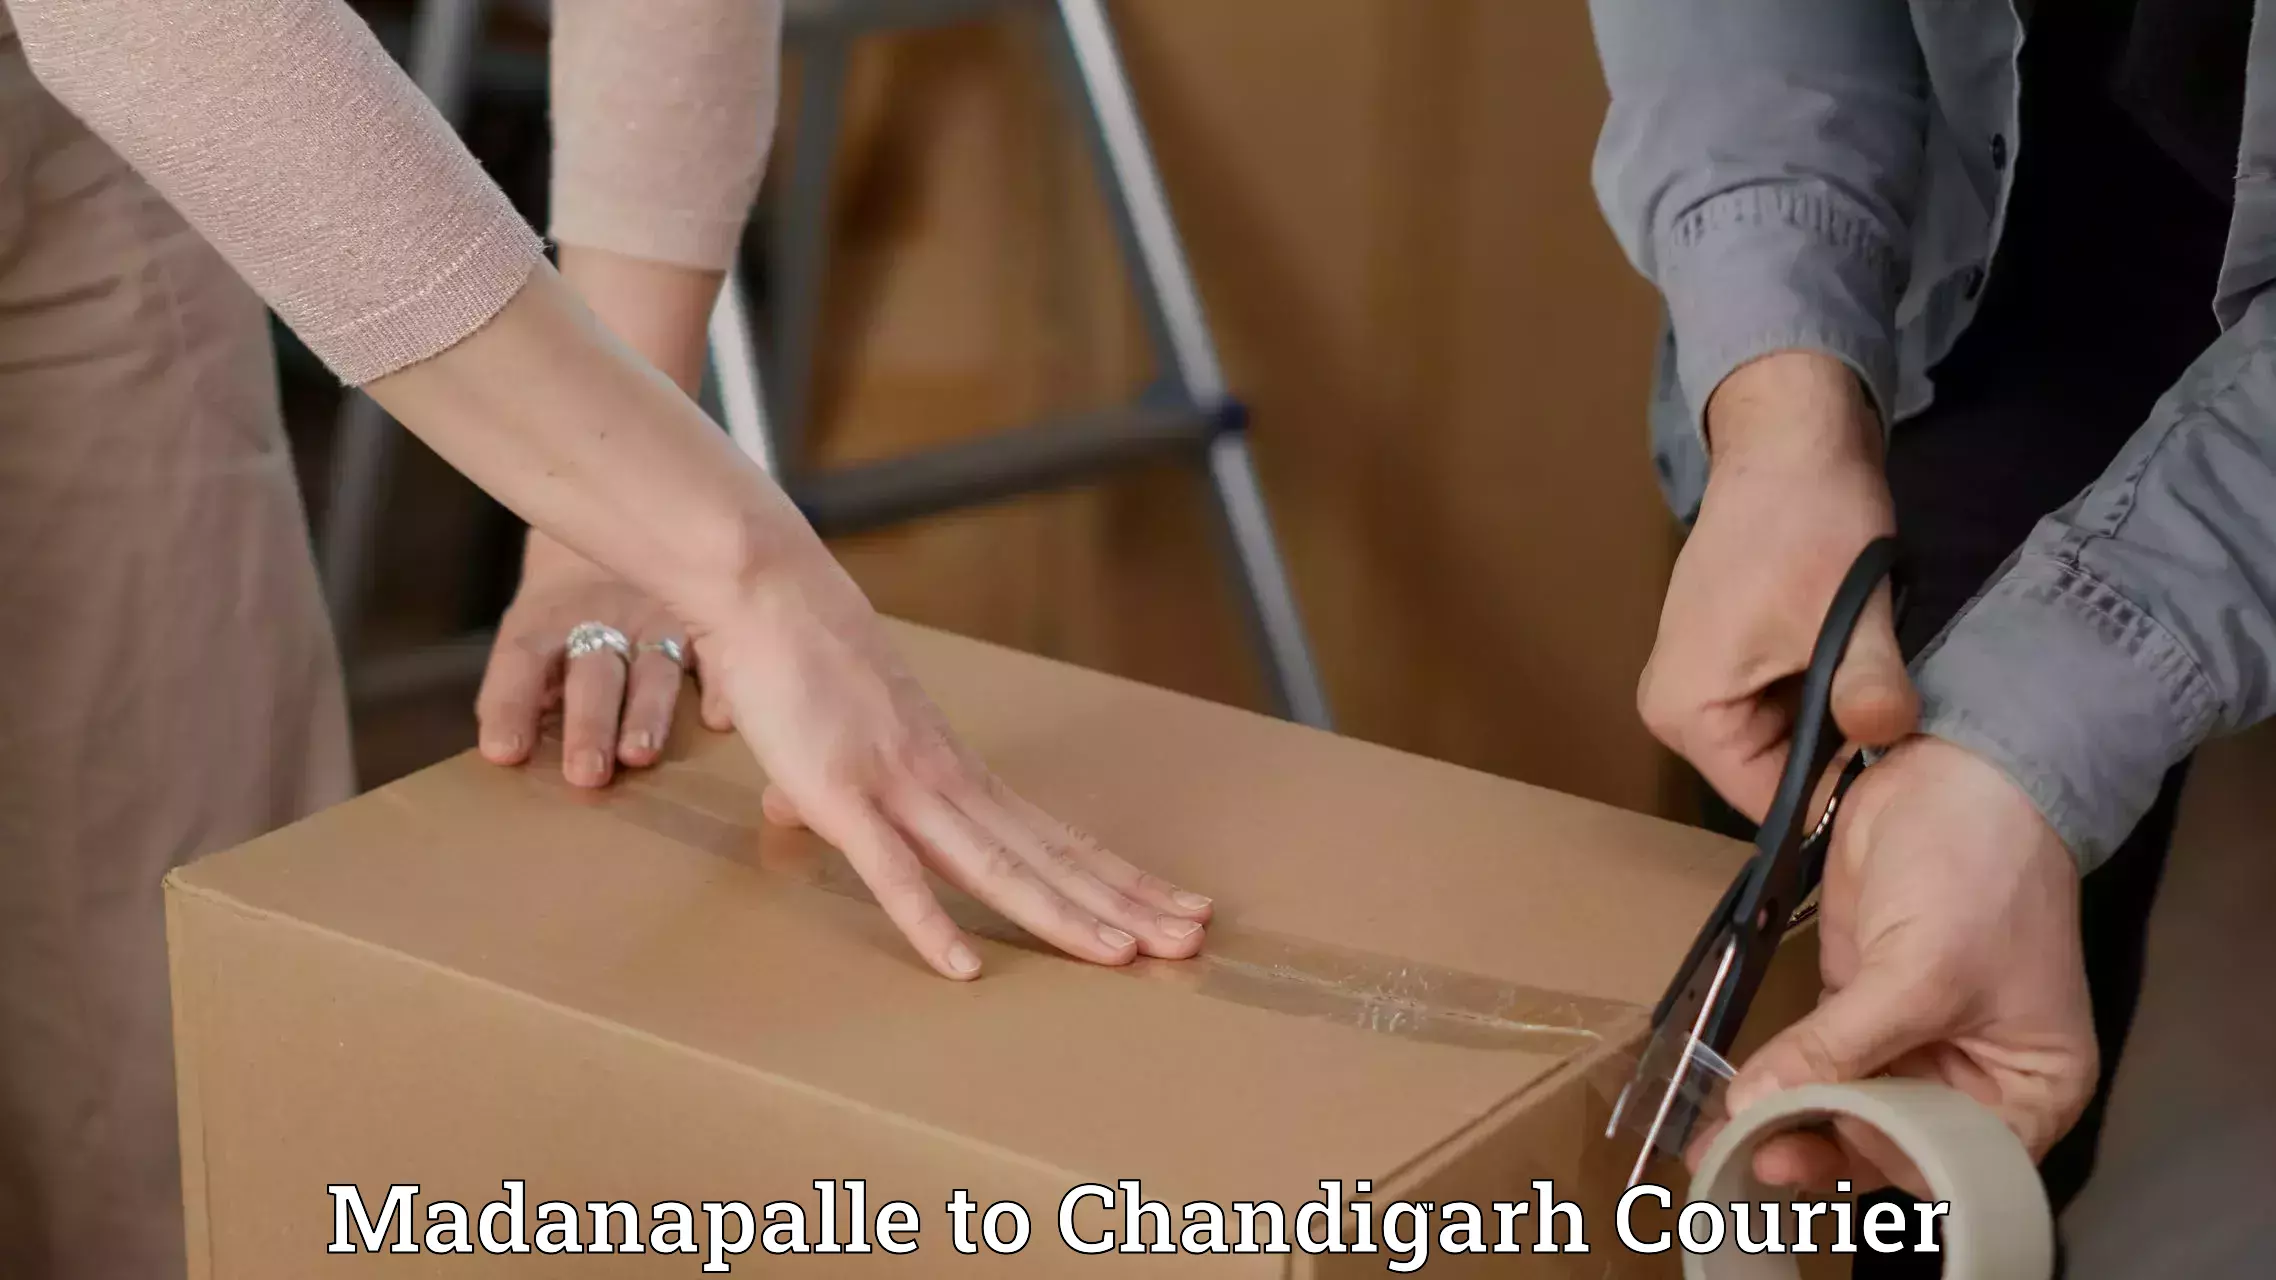 Tracking updates Madanapalle to Chandigarh